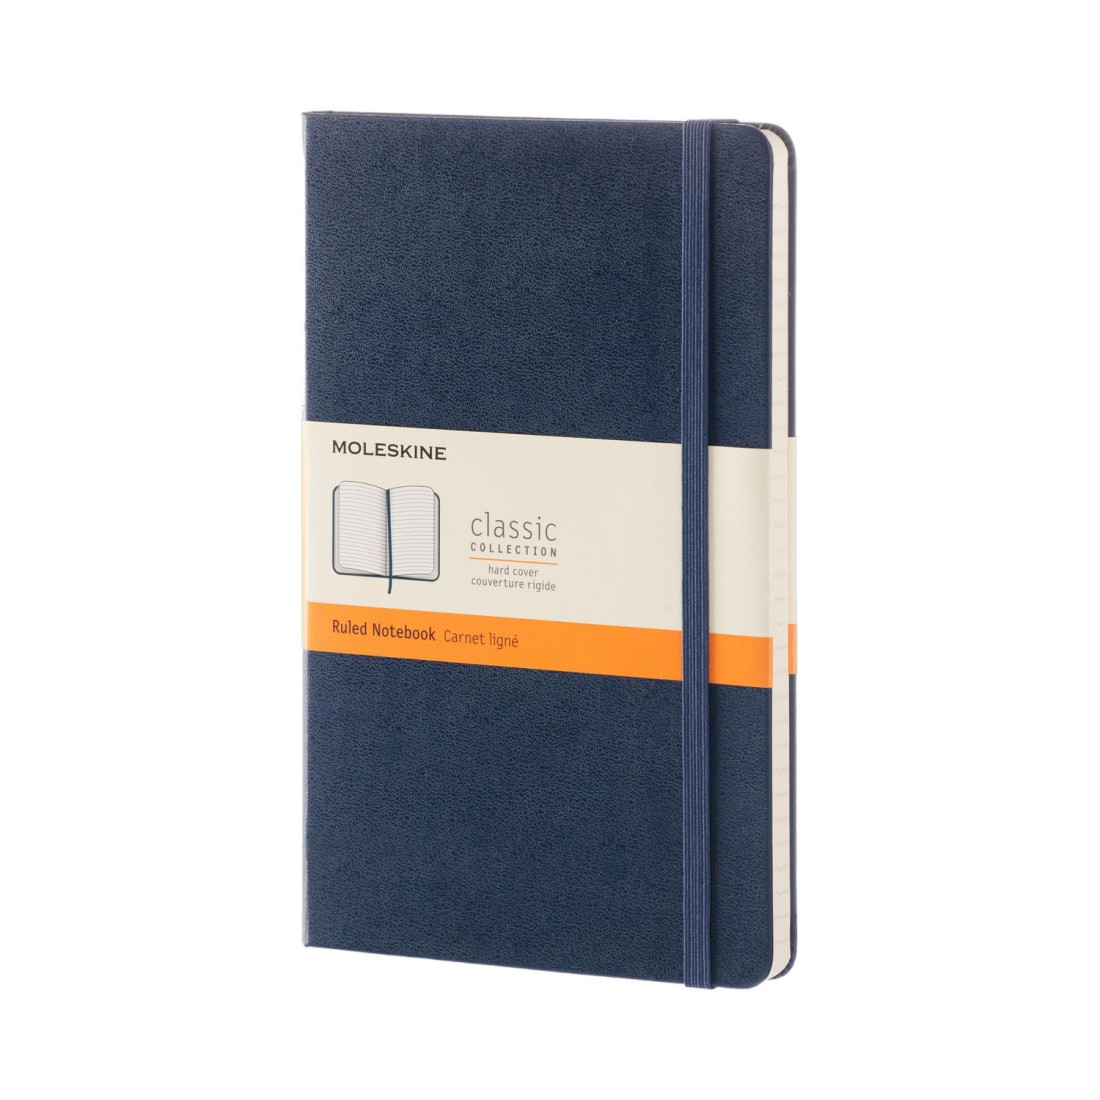 Moleskine ruled notebook Sapphire blue Large 13x21 Hard cover